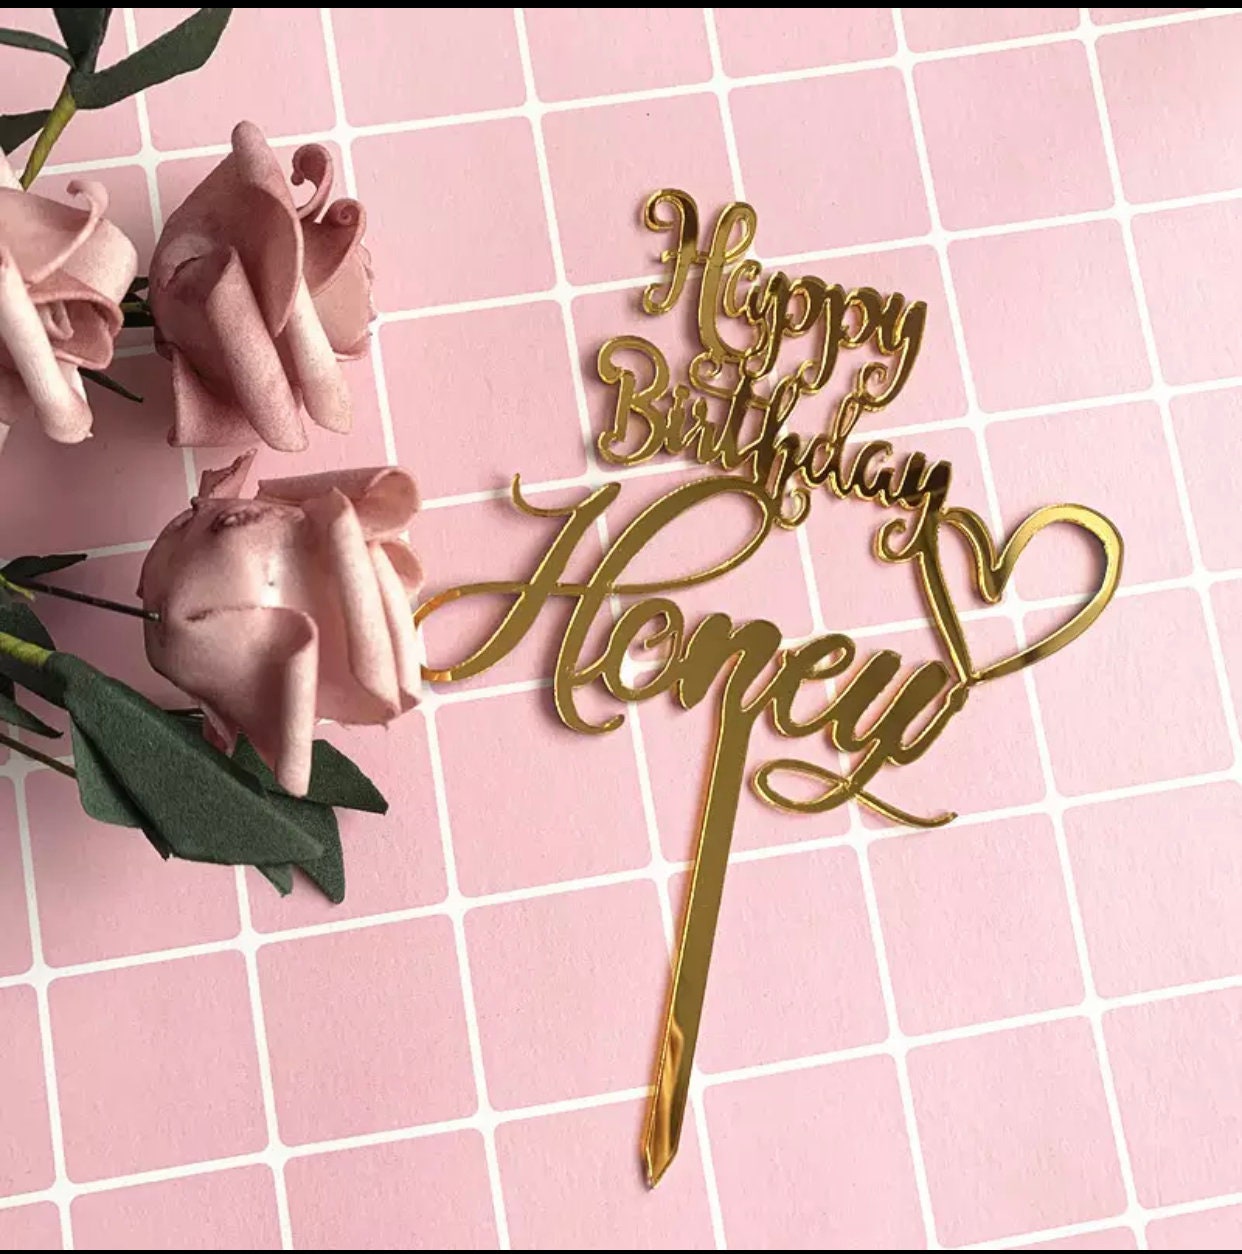 Honey Bee Cake Topper / Honey Bee Birthday Party / Honey Bee Party Supply /  Honey Comb Party Decoration / Honey Comb Cake Topper 